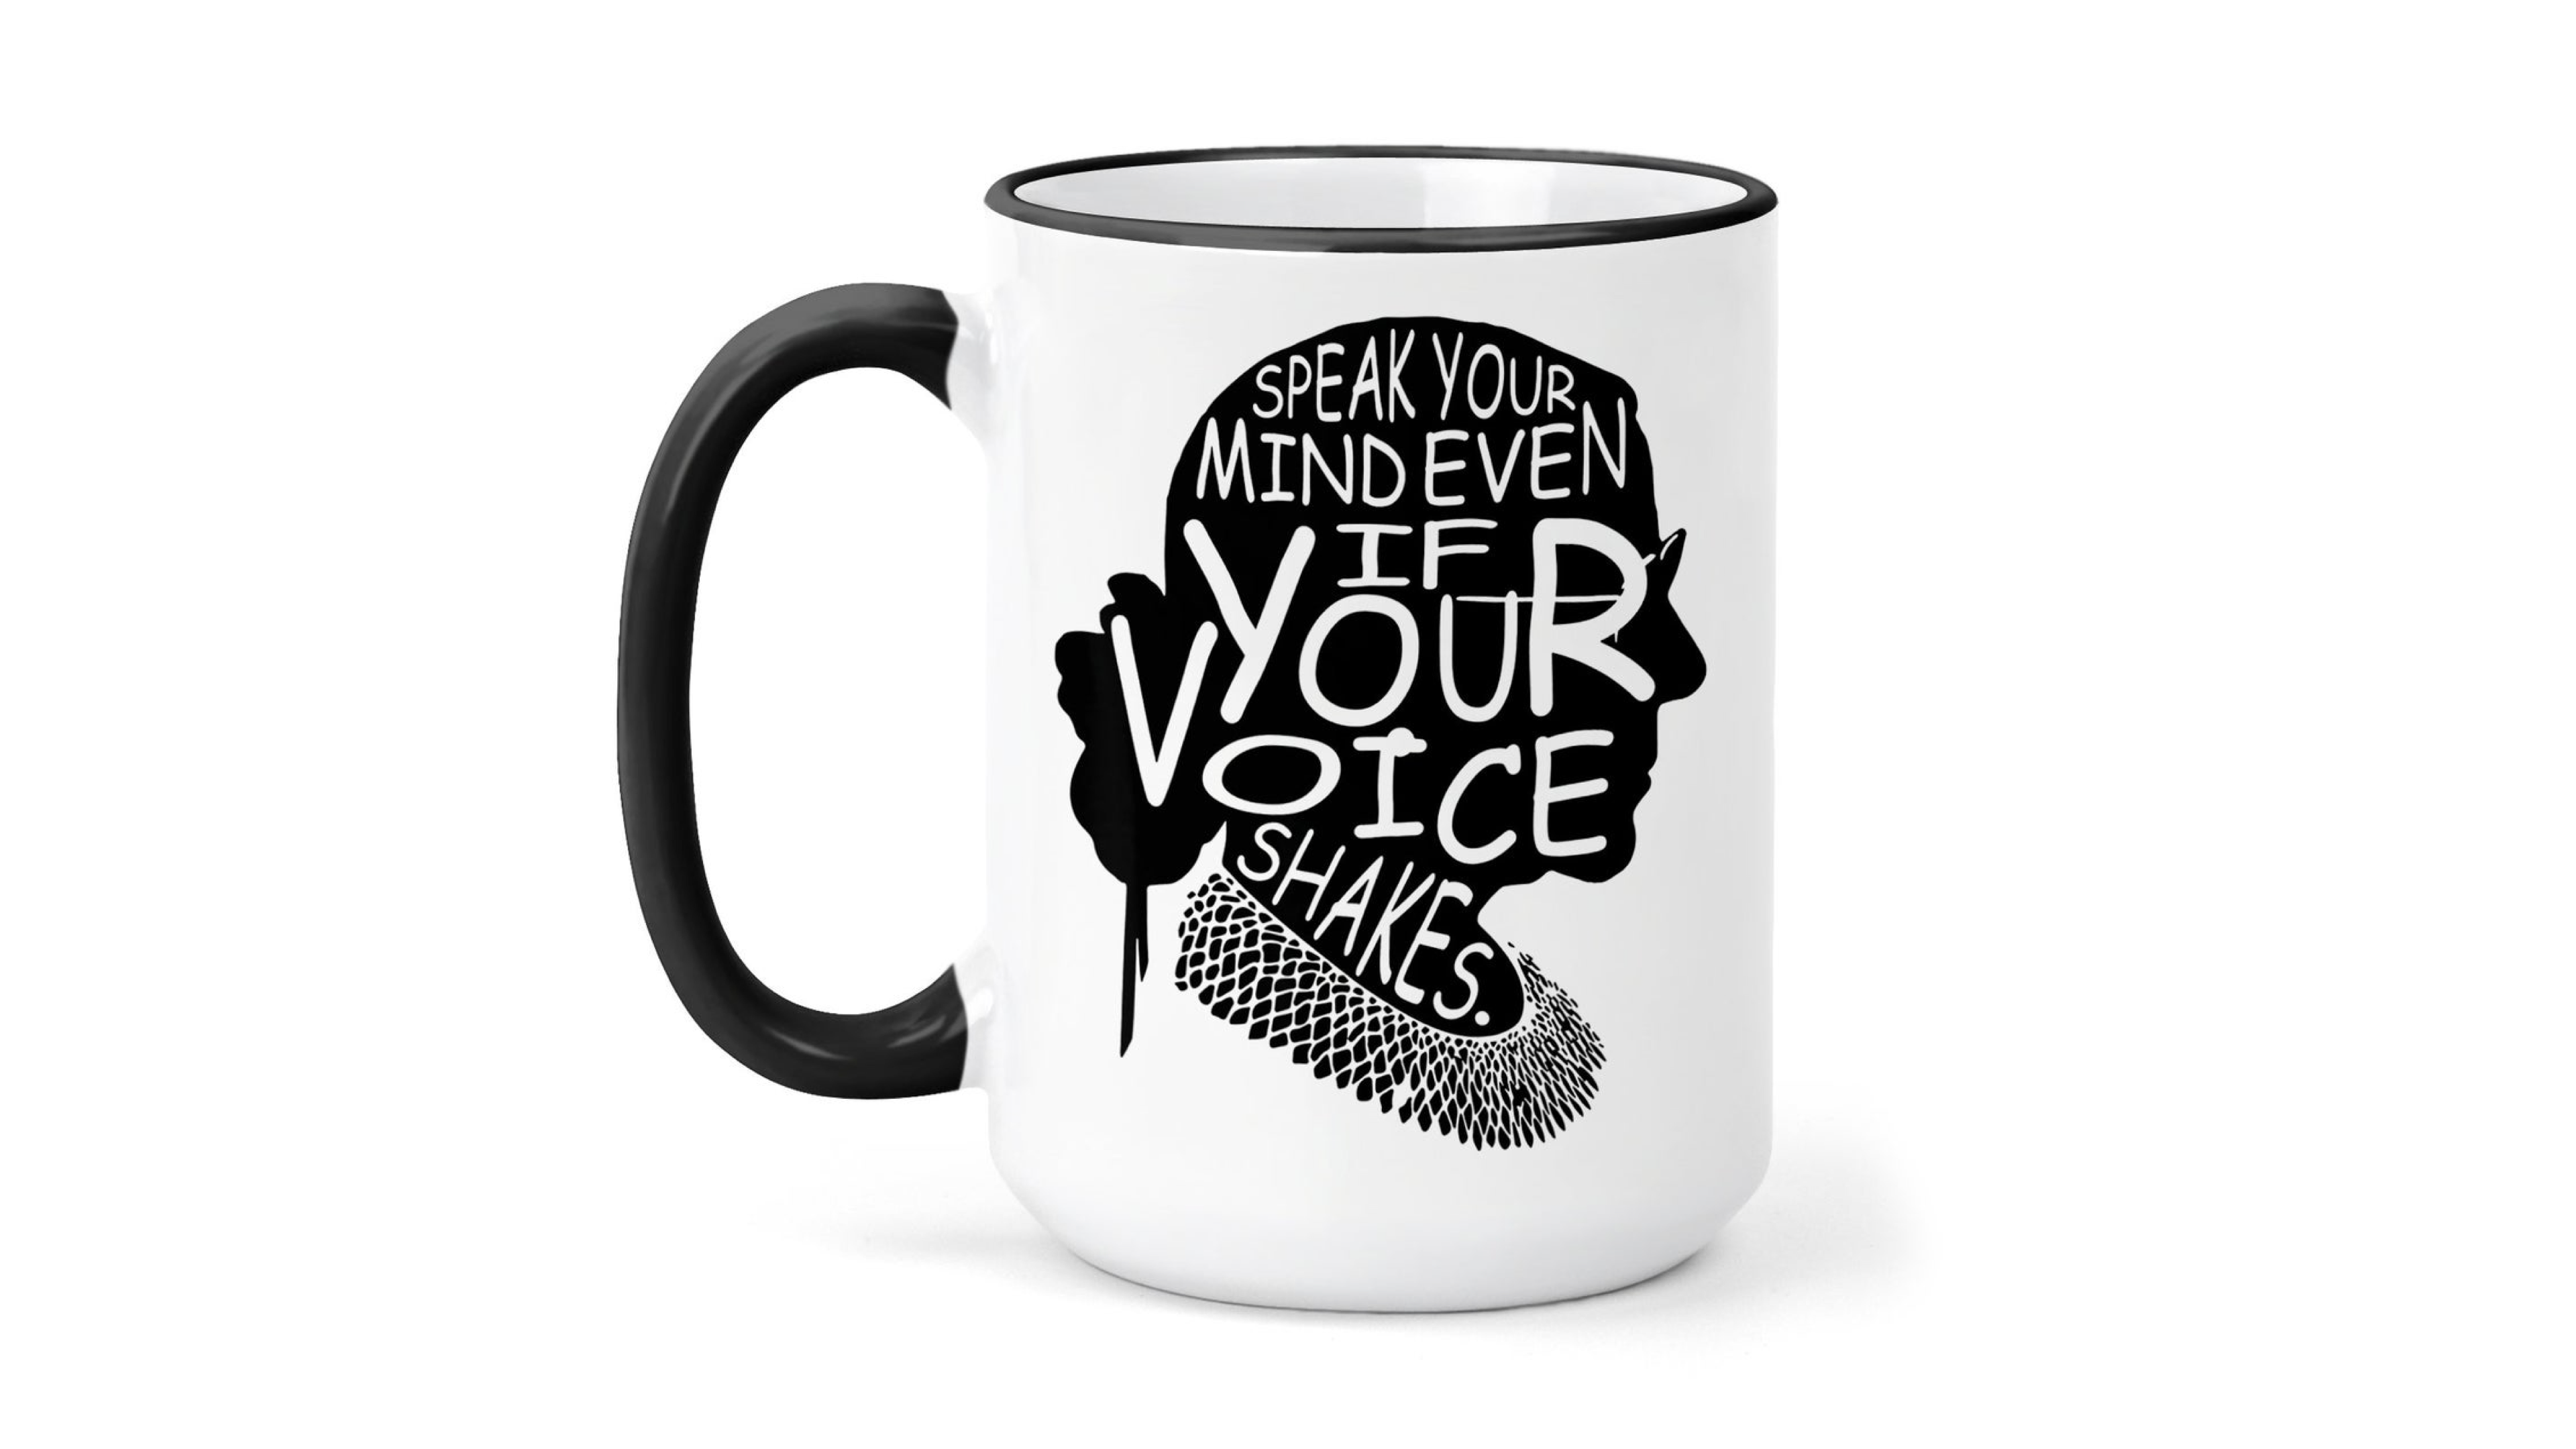 RBG-themed mug